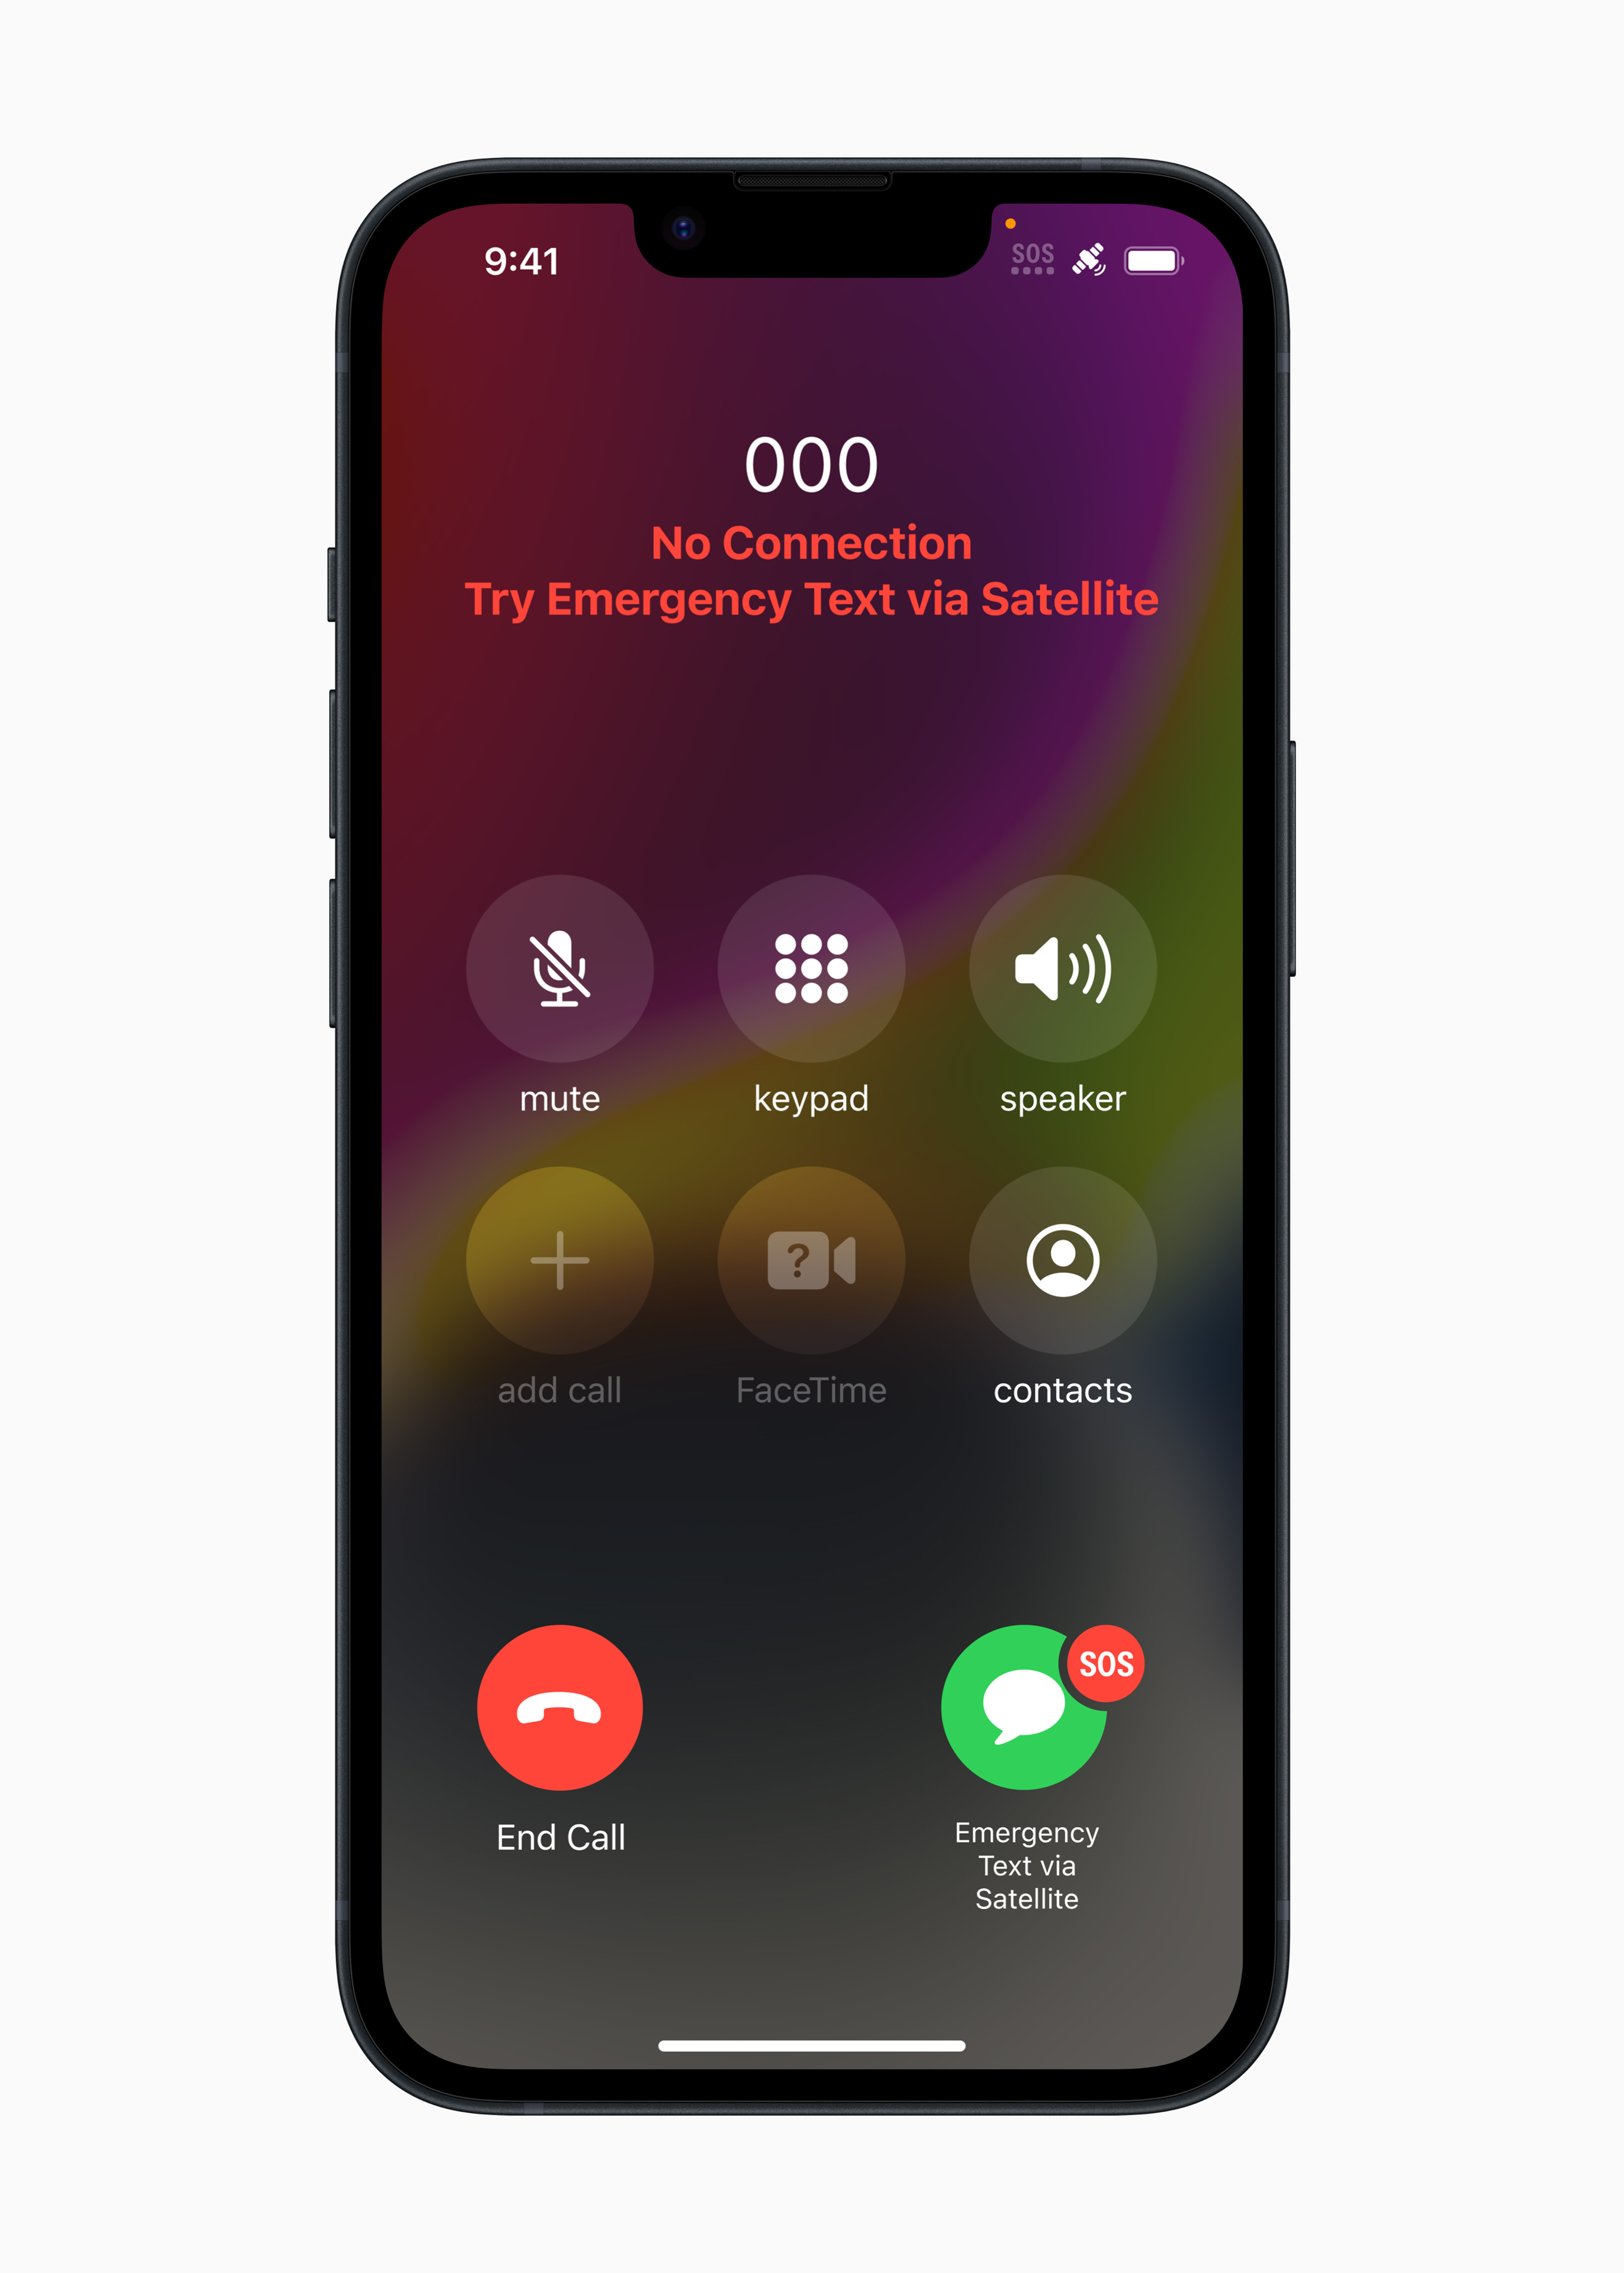 Emergency SOS via satellite available in Australia, New Zealand - Apple (AU)